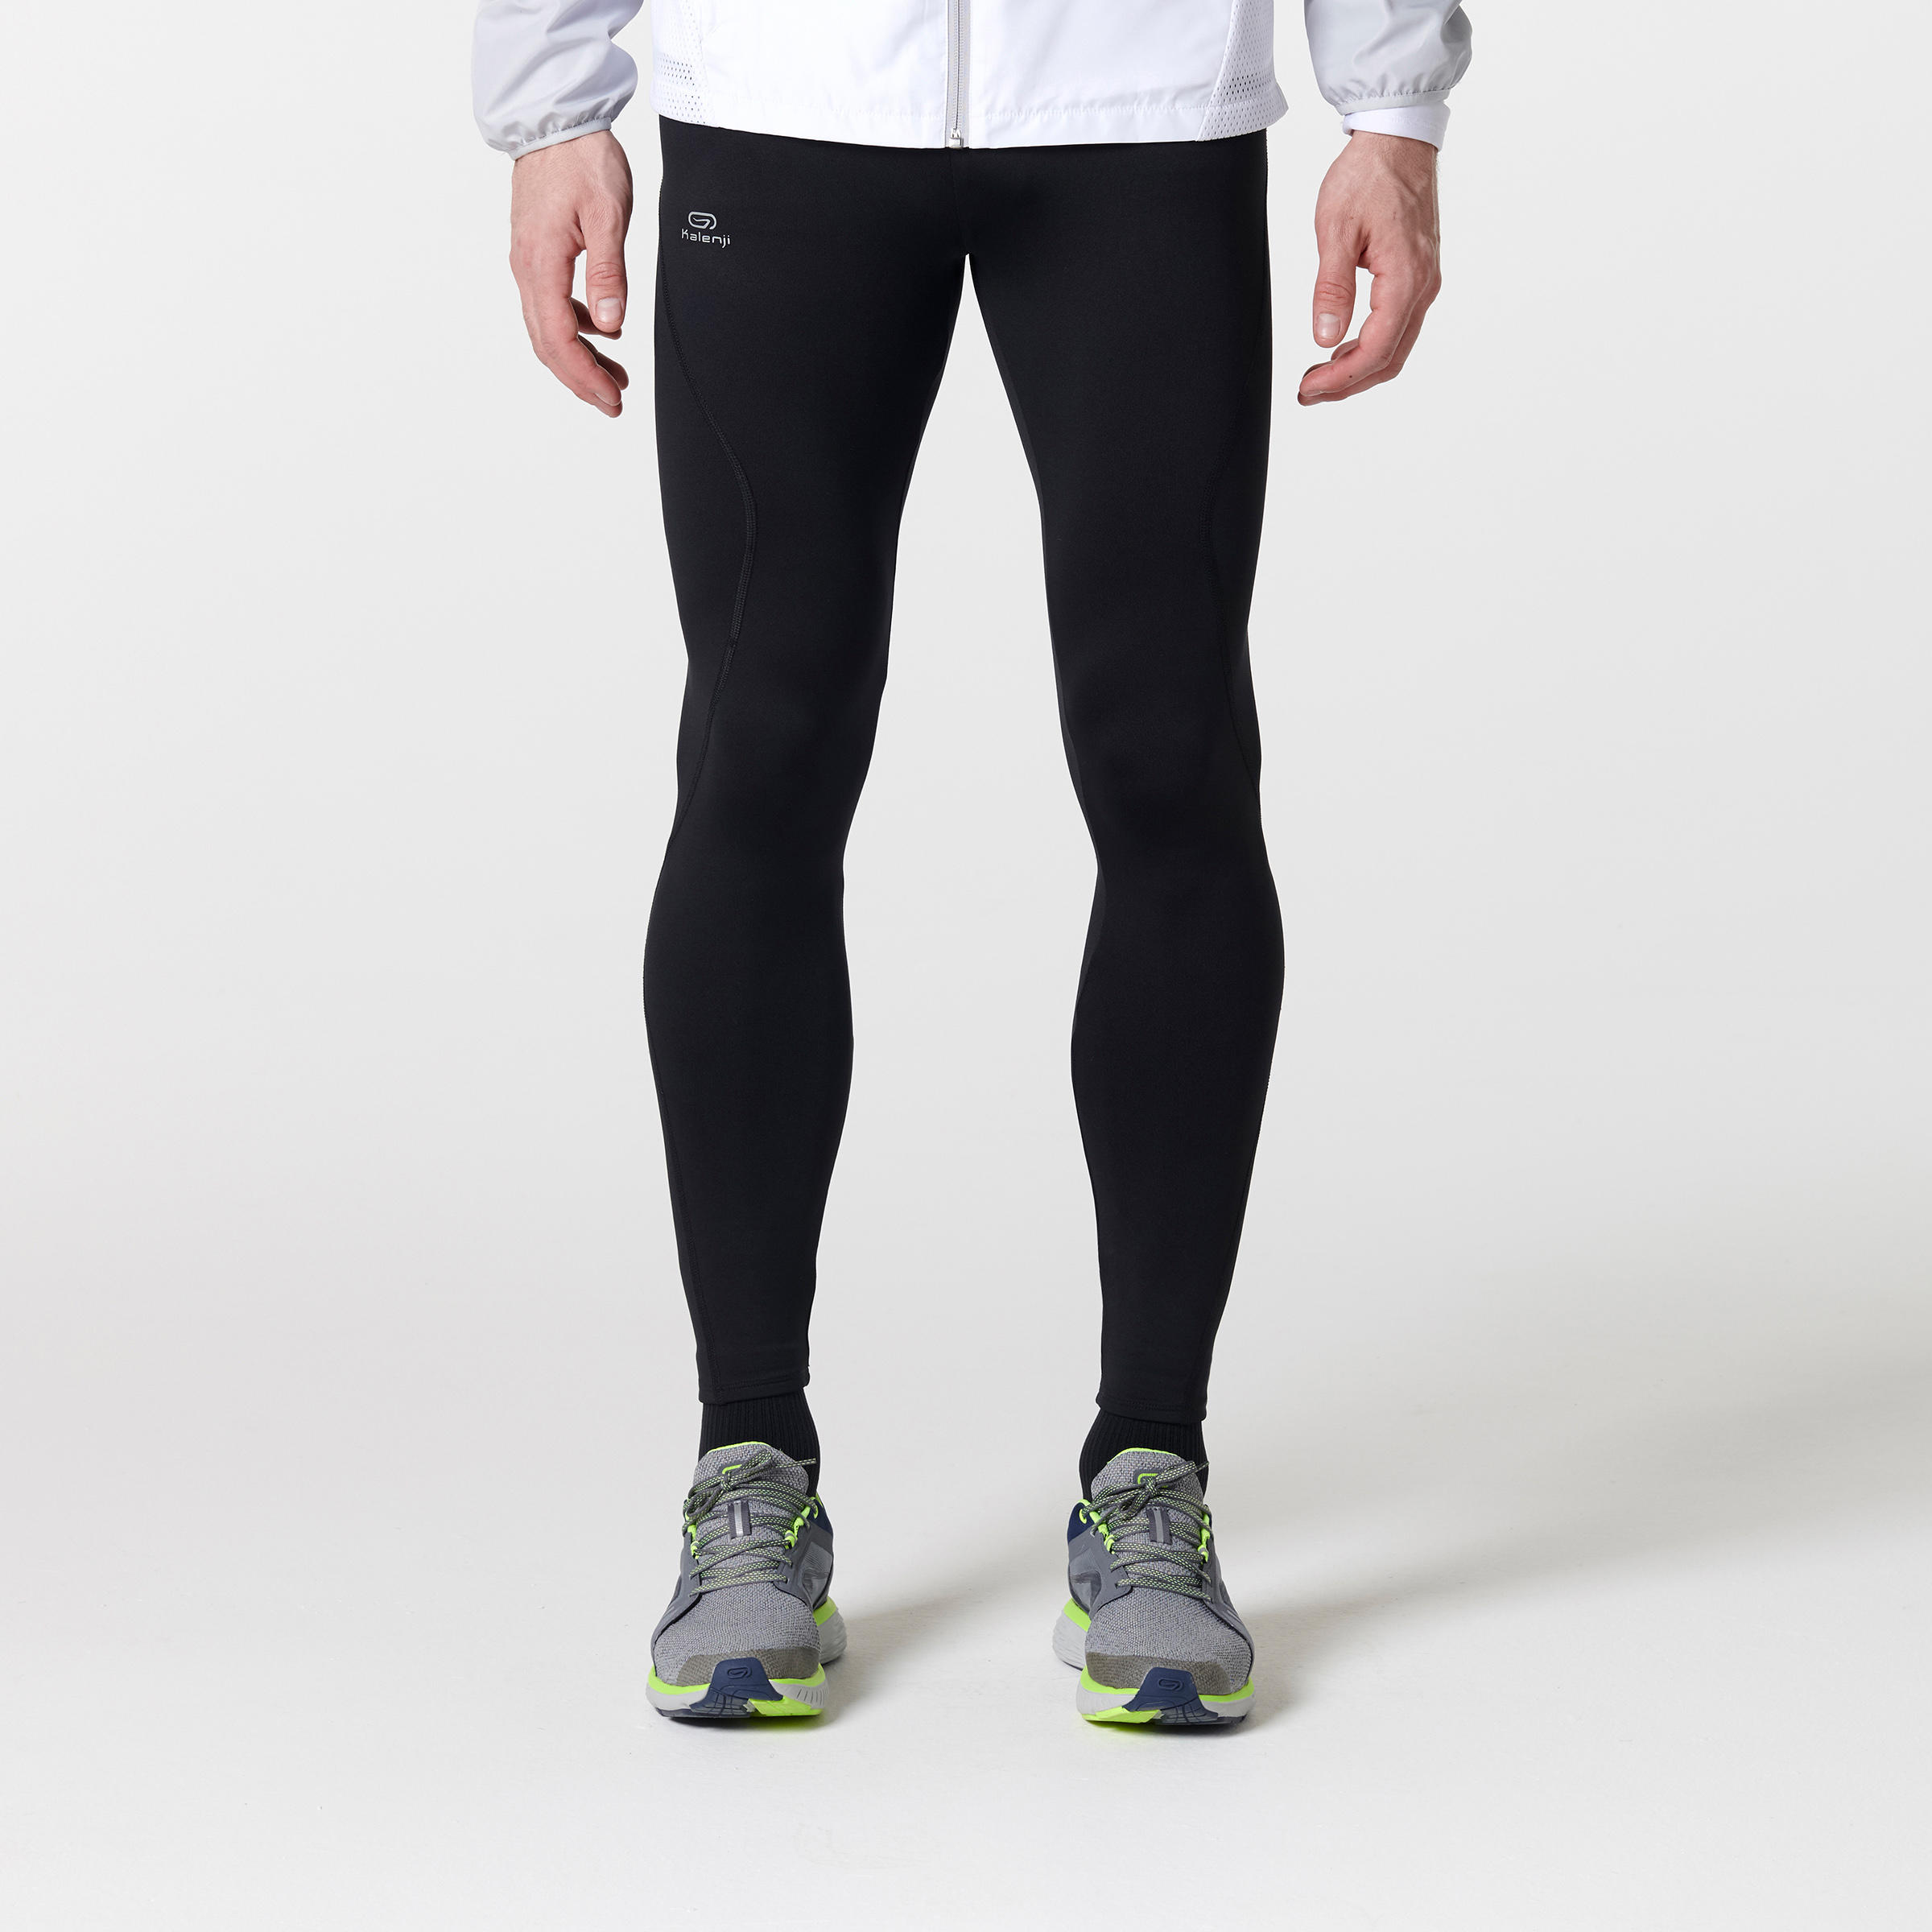 decathlon running leggings